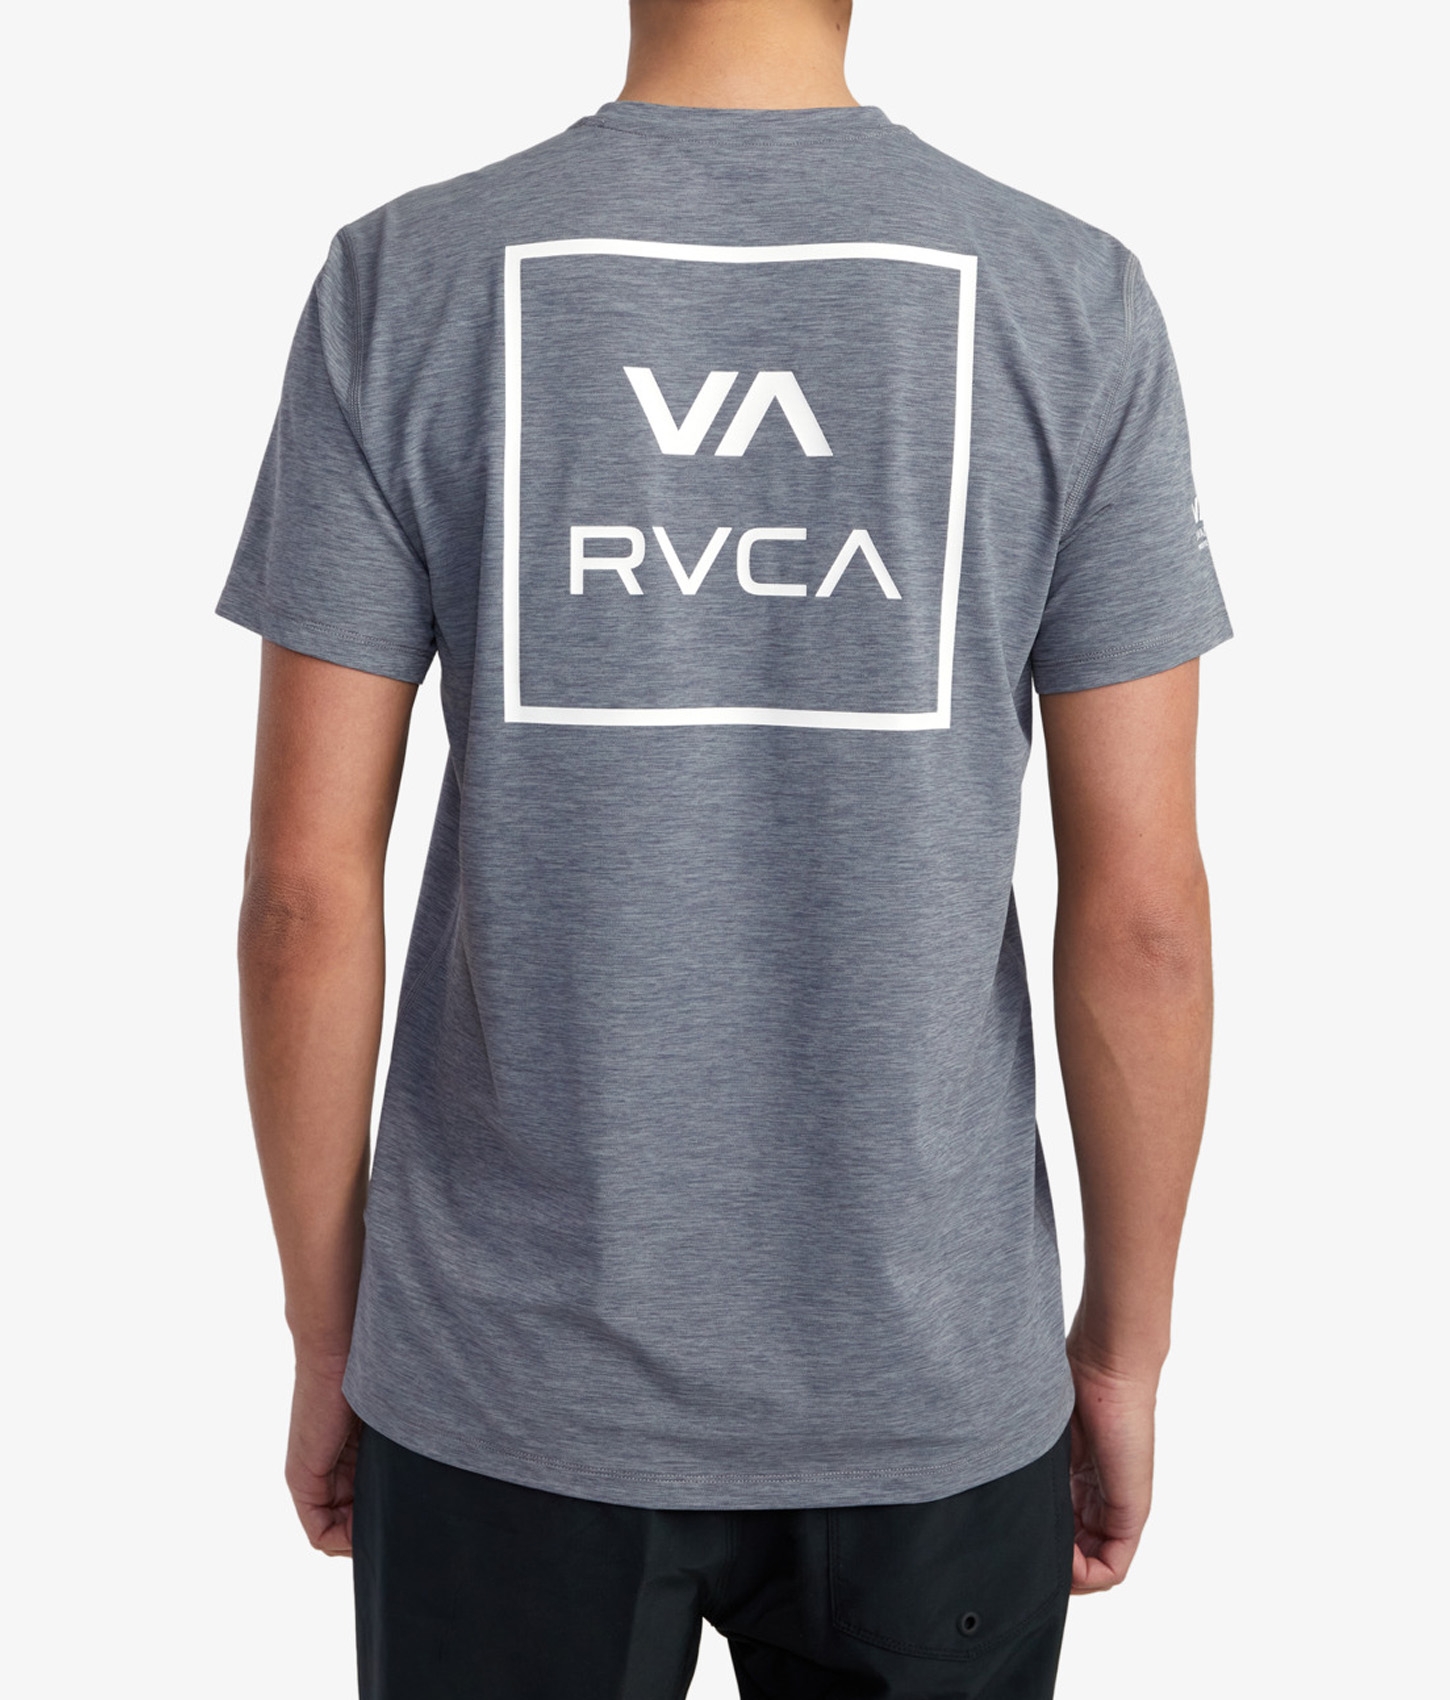 RVCA Short Sleeve Rashguard